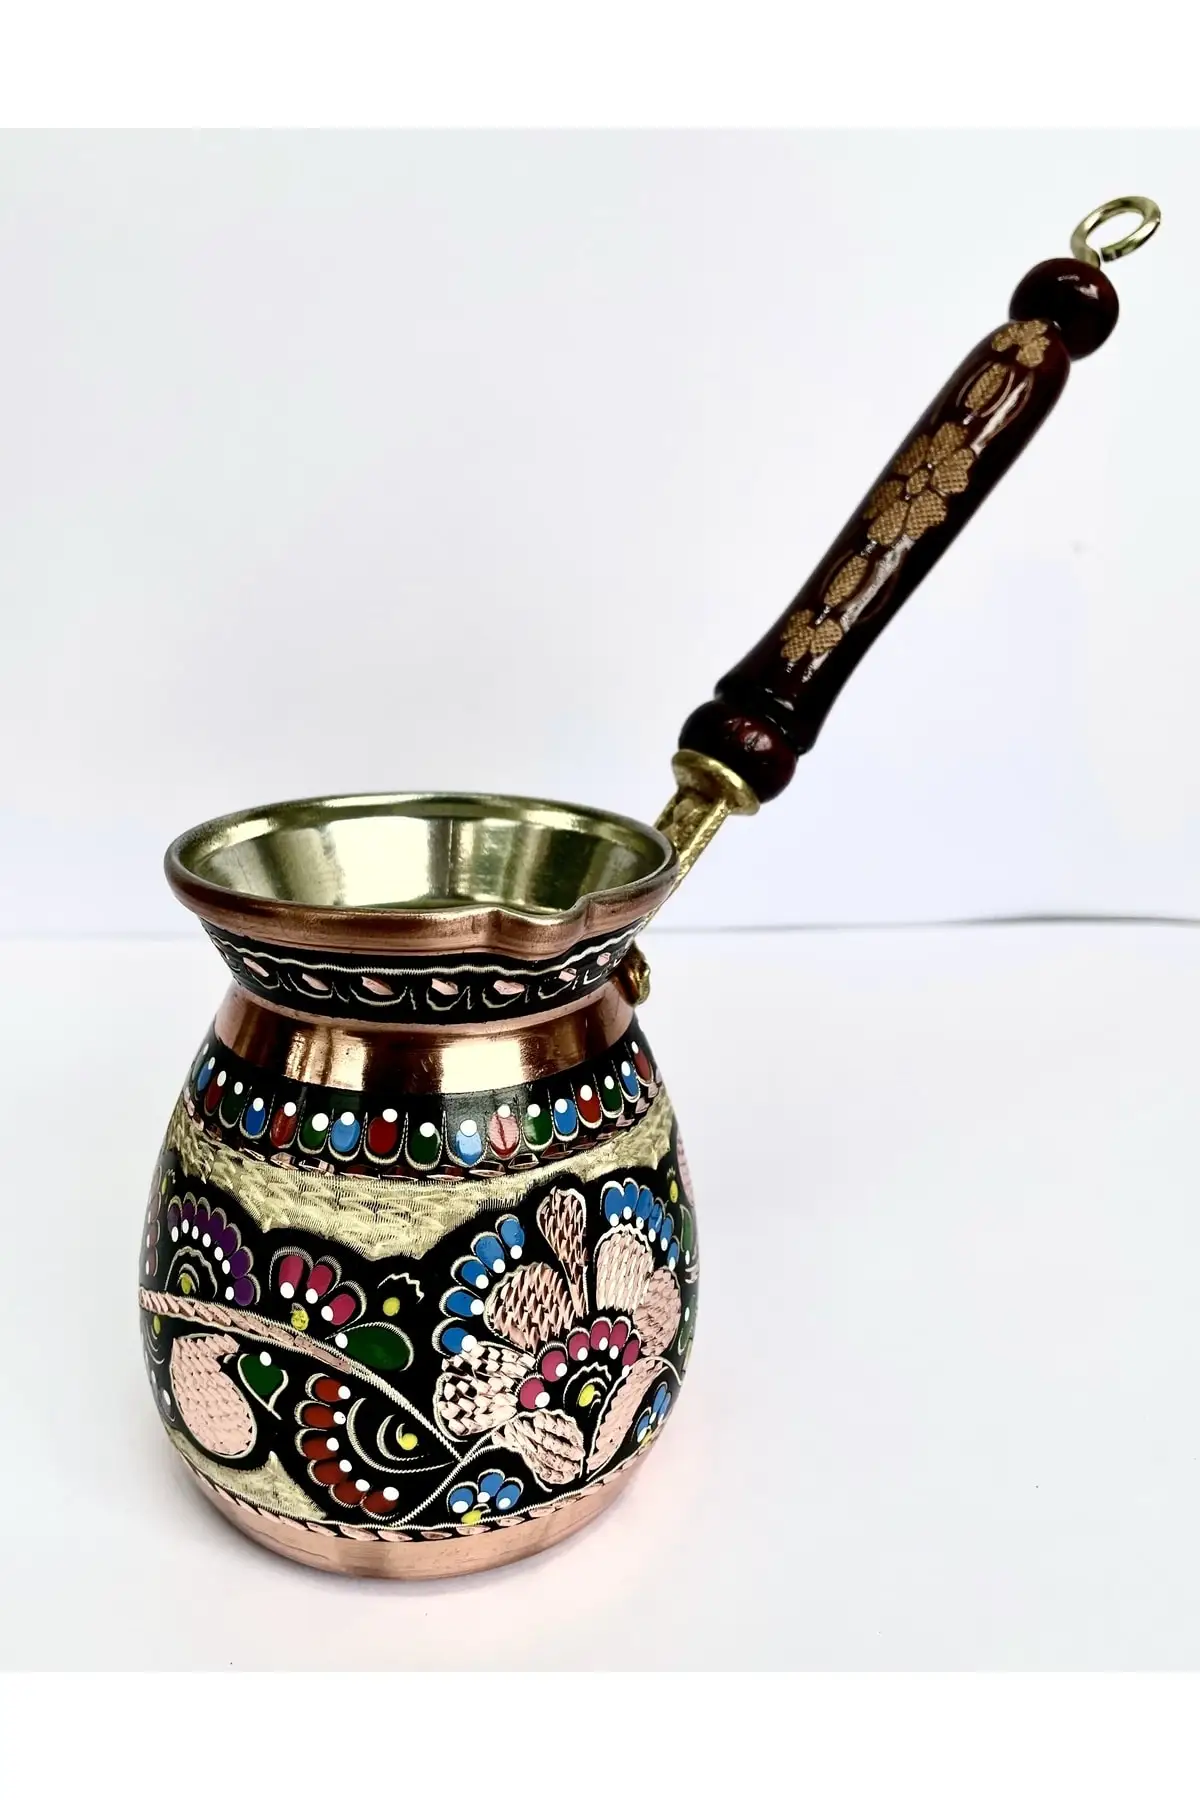 New Deal Turkish Coffee Pot Coffee Maker 4-6-8 Person Copper Coffee Maker Cezve Handmade High Quality Ottomon Arabic